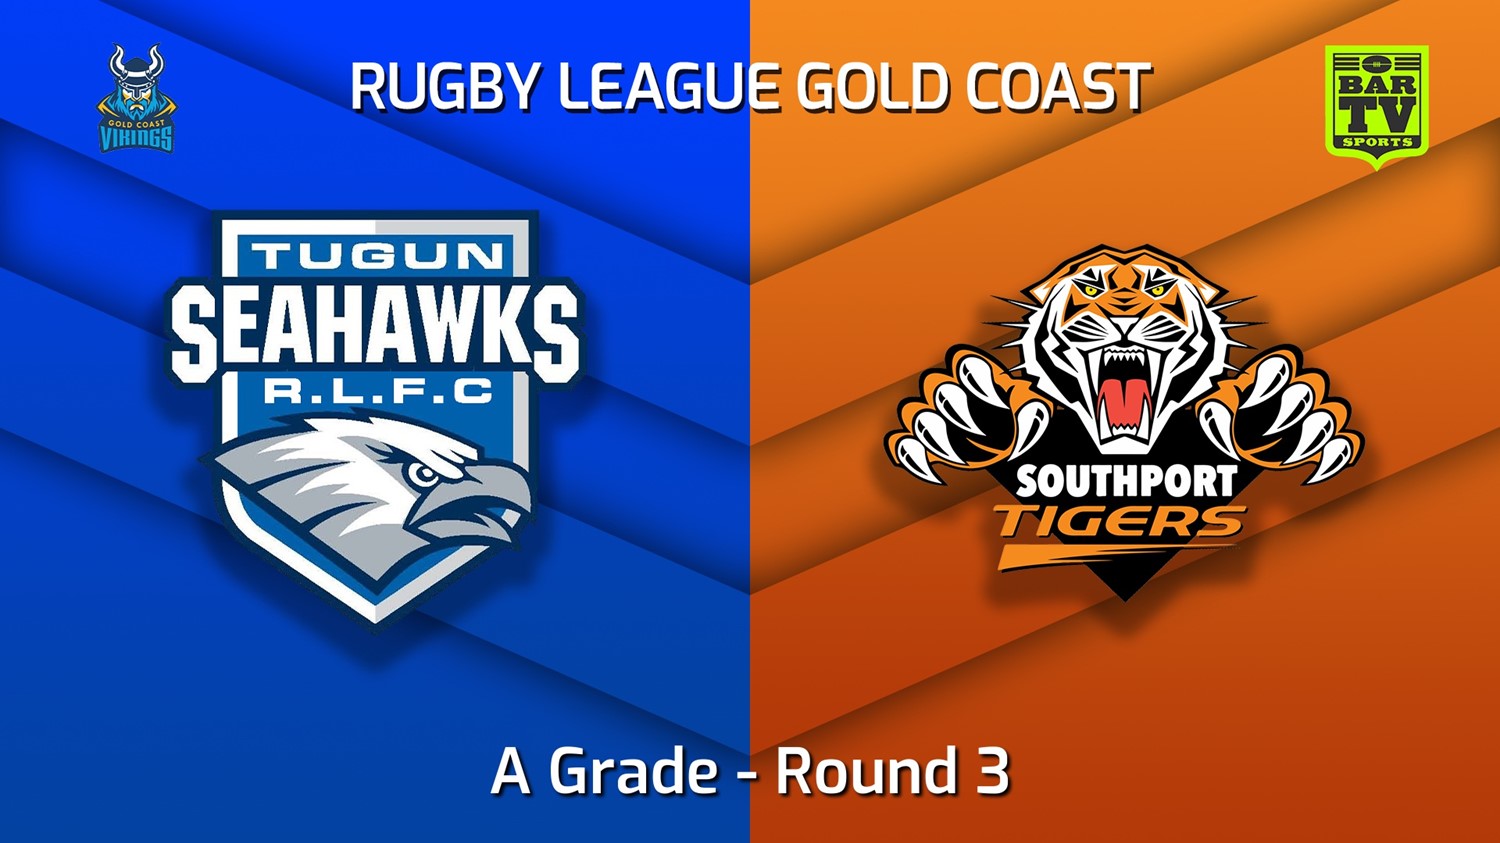 220409-Gold Coast Round 3 - A Grade - Tugun Seahawks v Southport Tigers Slate Image